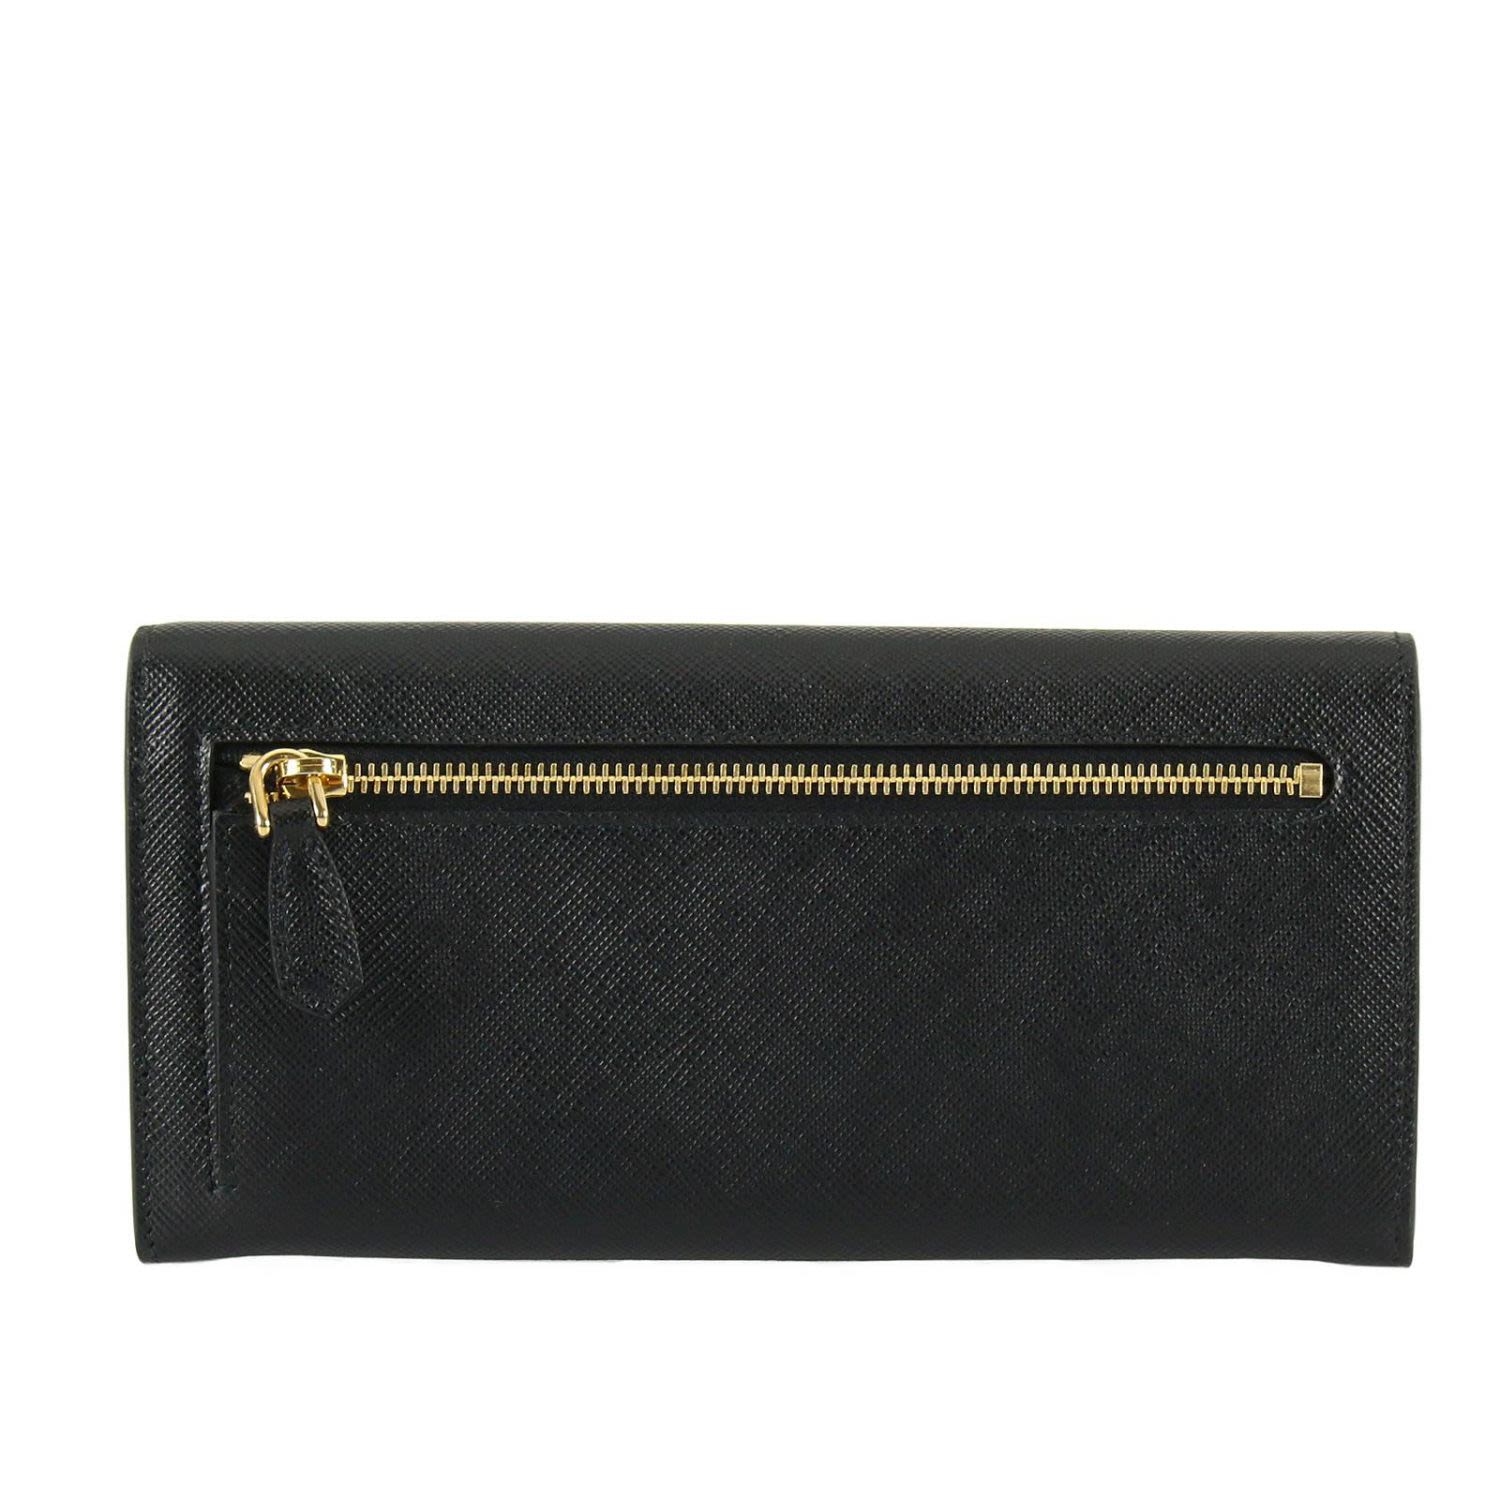 italist | Best price in the market for Prada Wallet Wallet Women Prada - black - 10494836 | italist